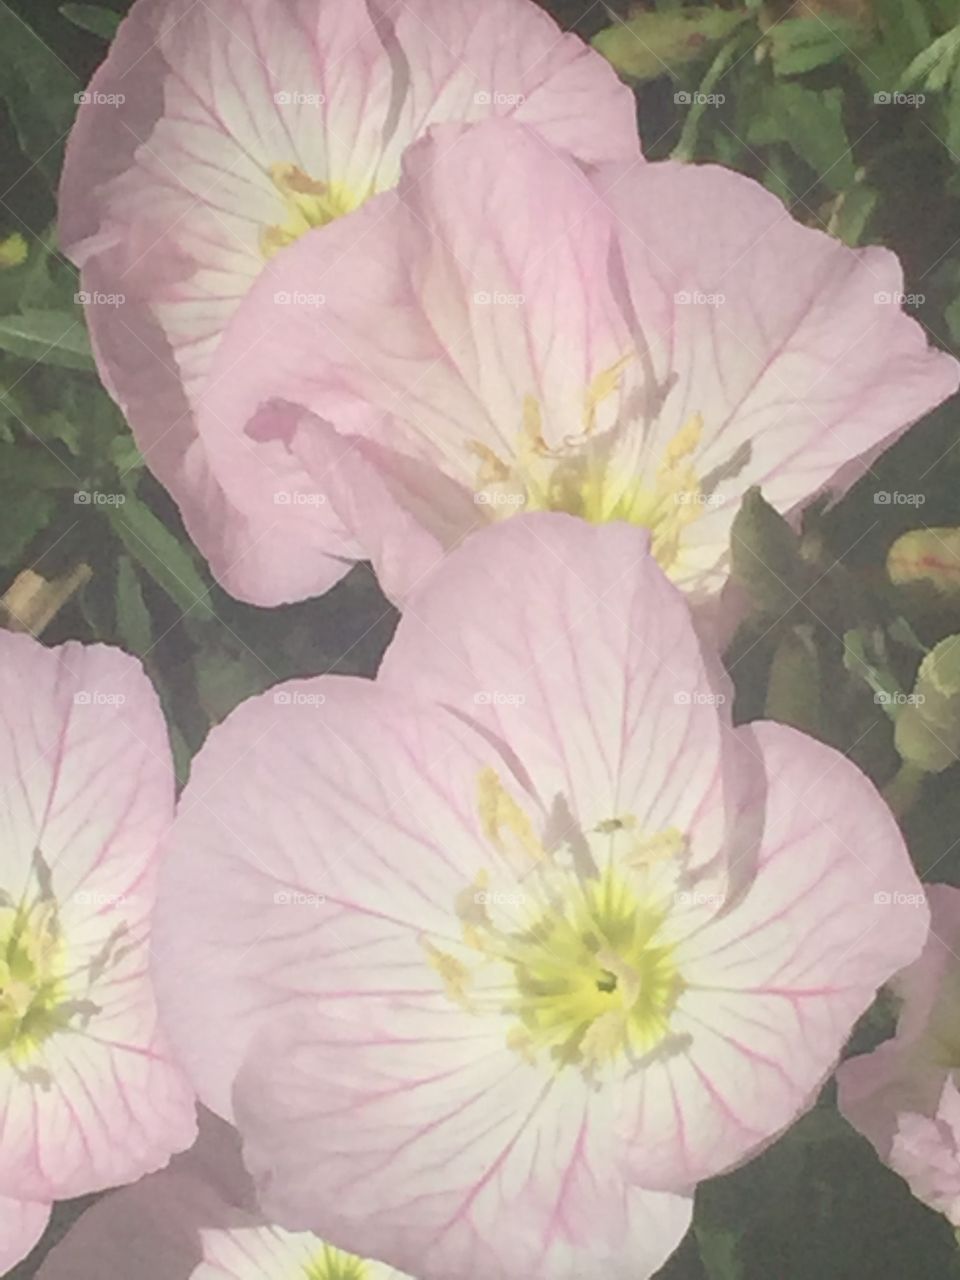 Light pink-white flowers